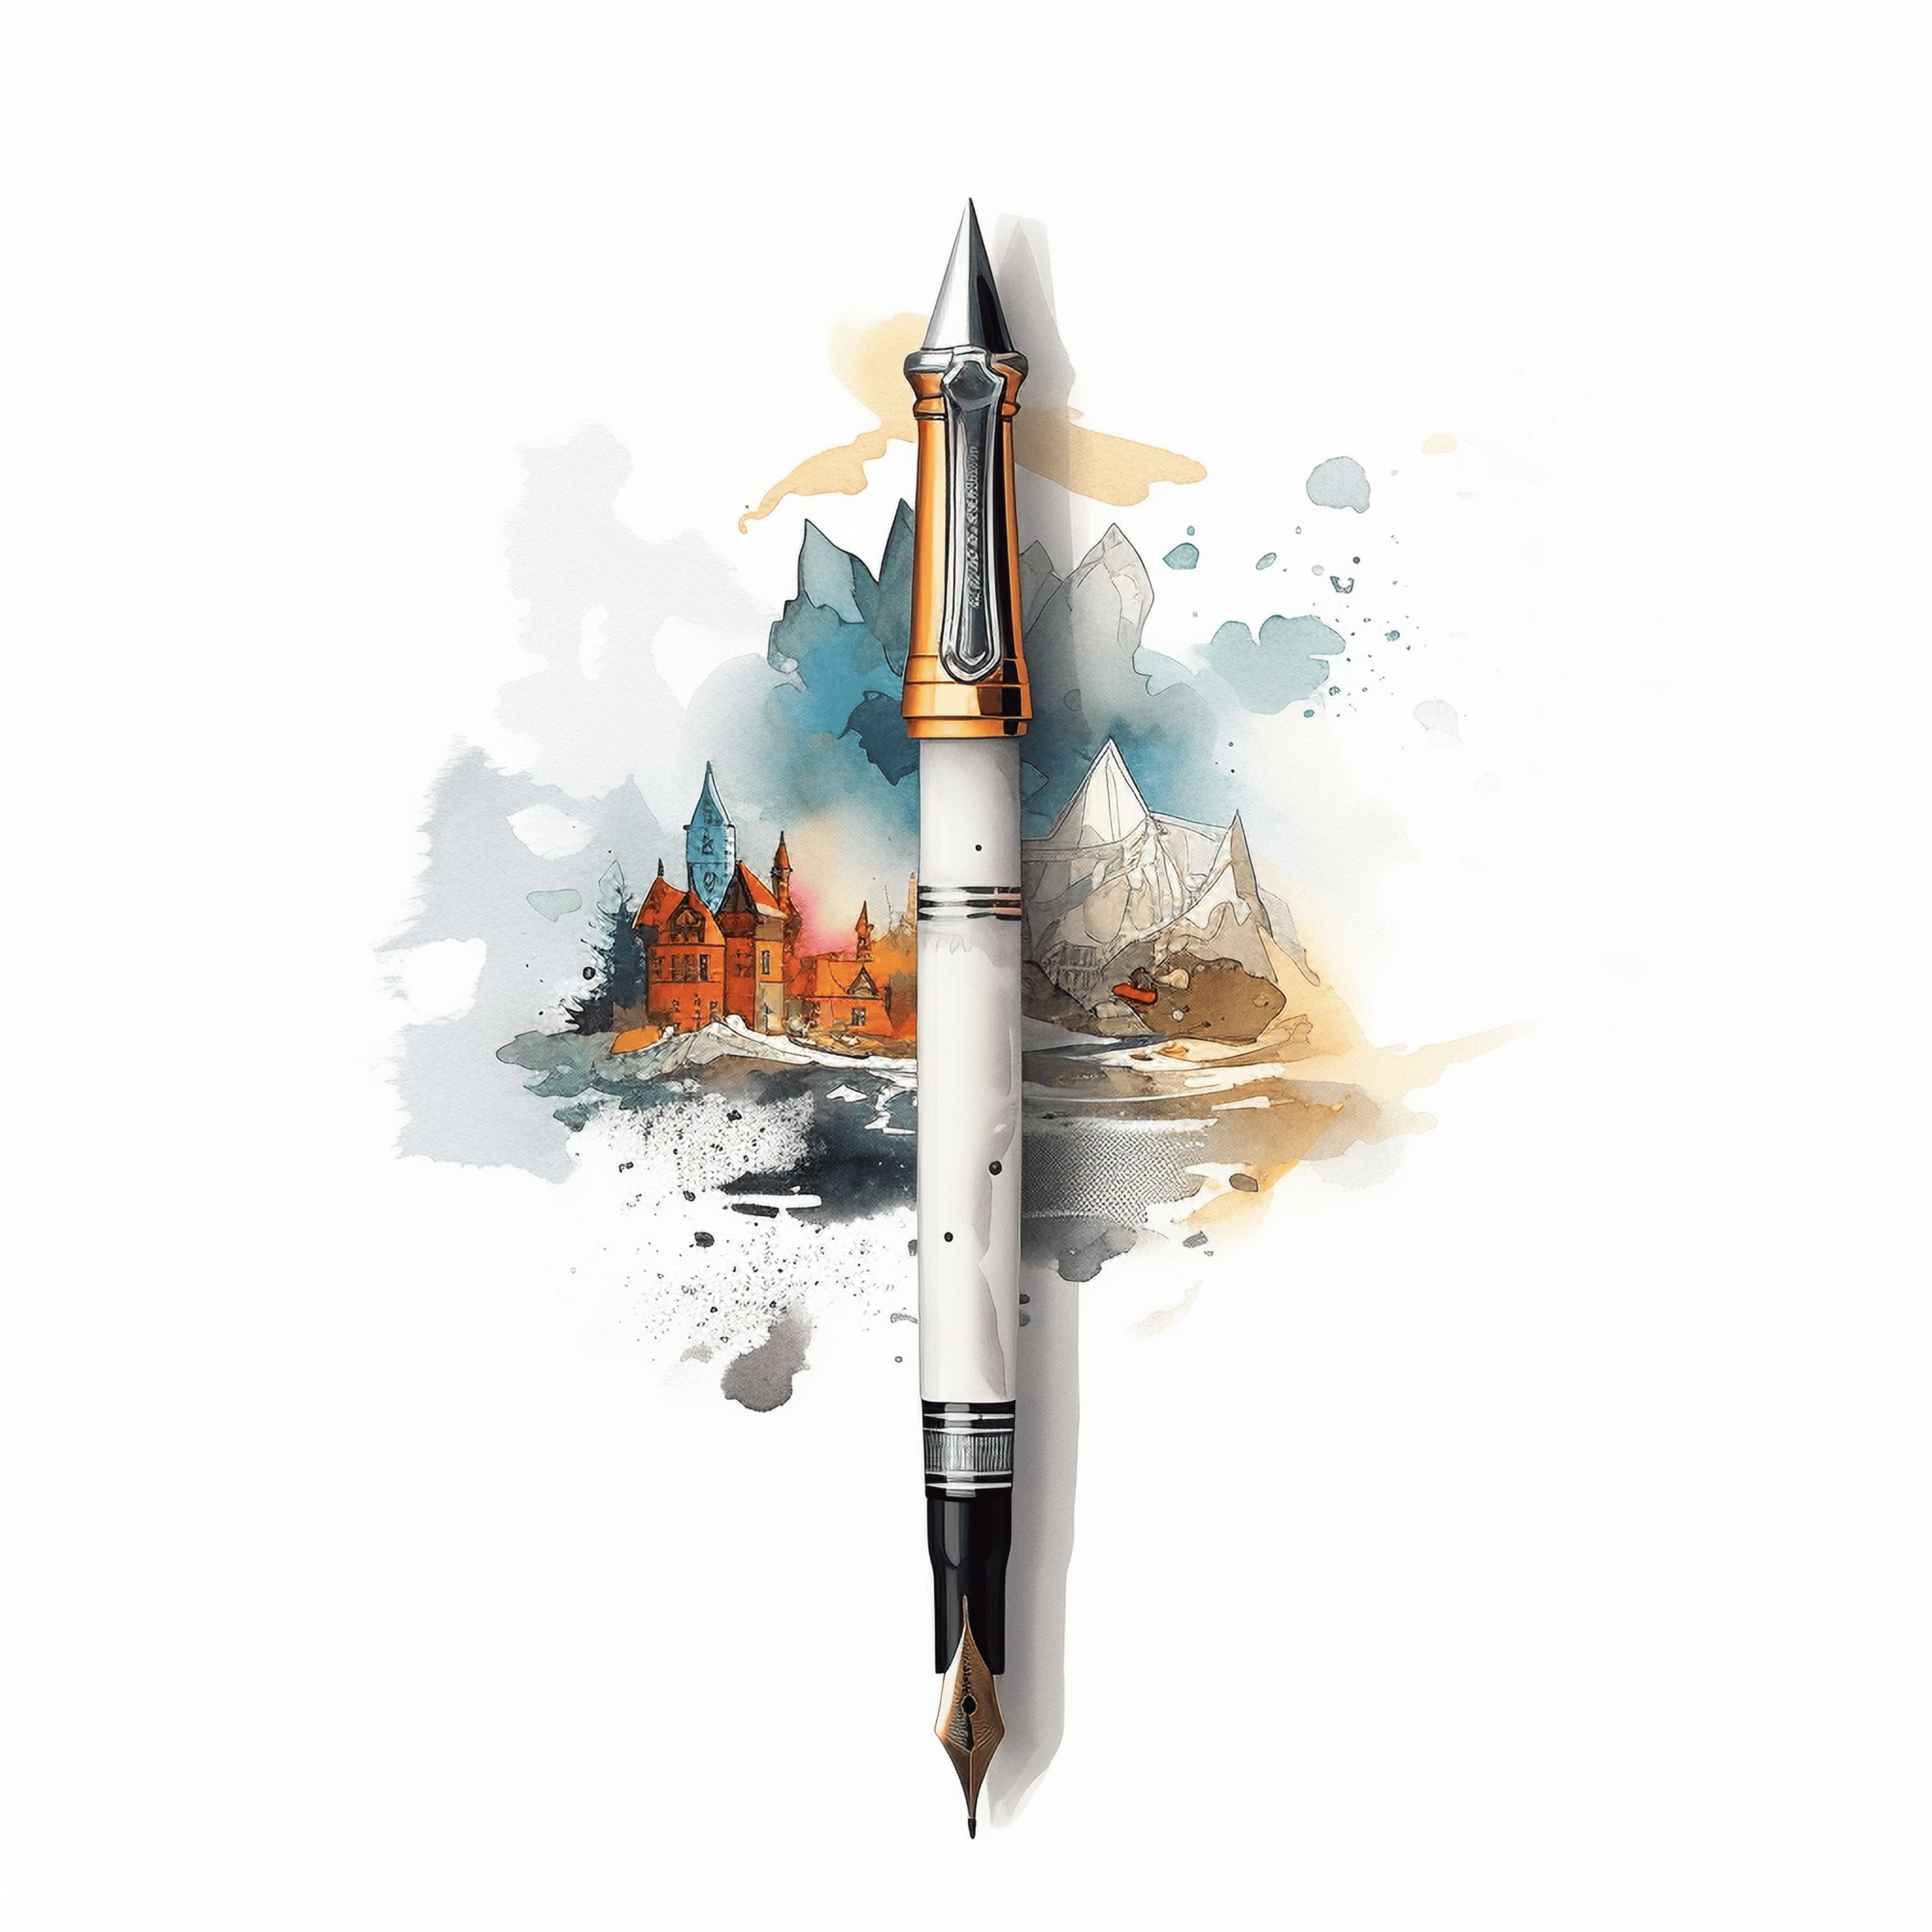 Exceptional Design of a pen pencil